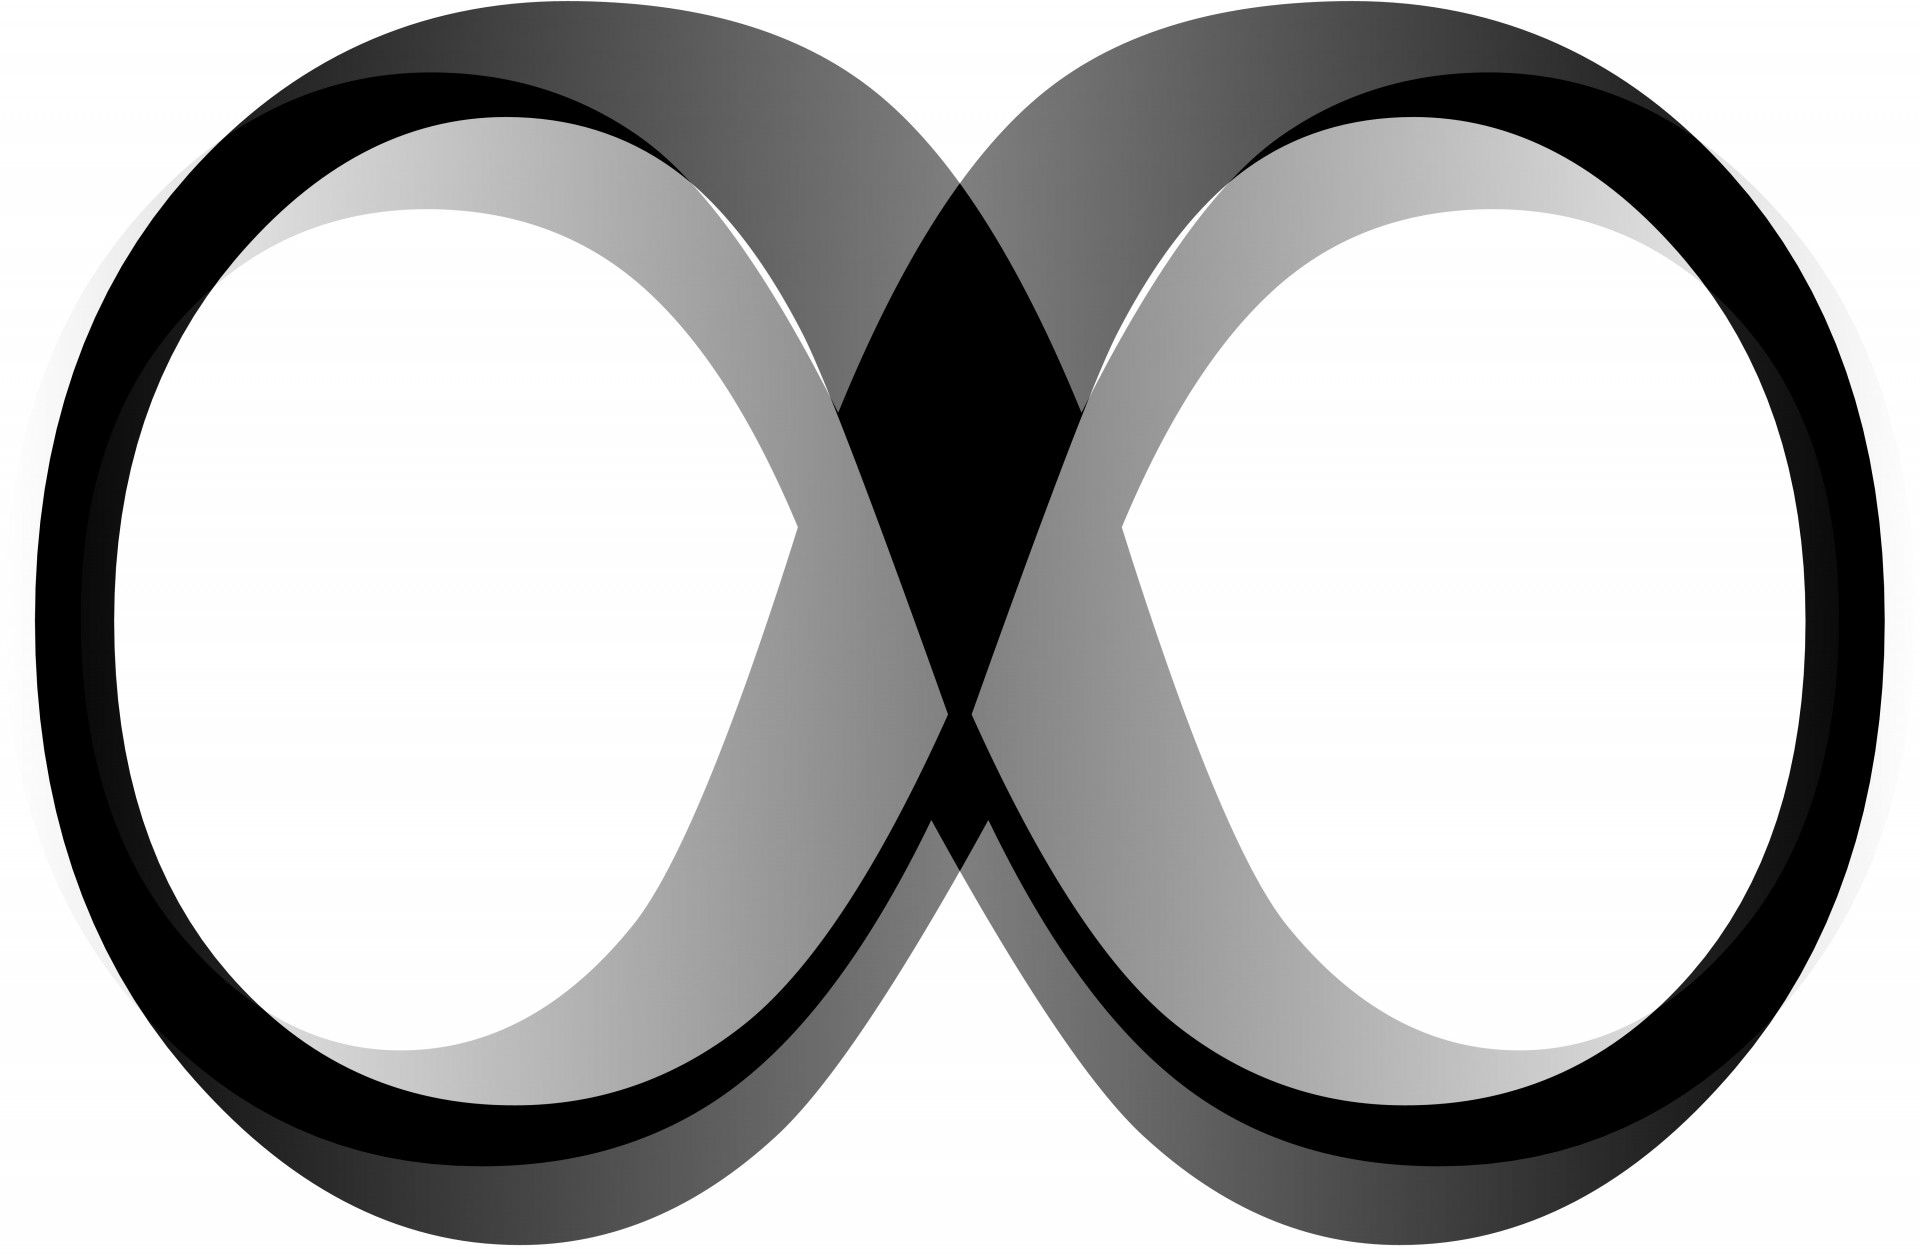 Black Infinity Symbol